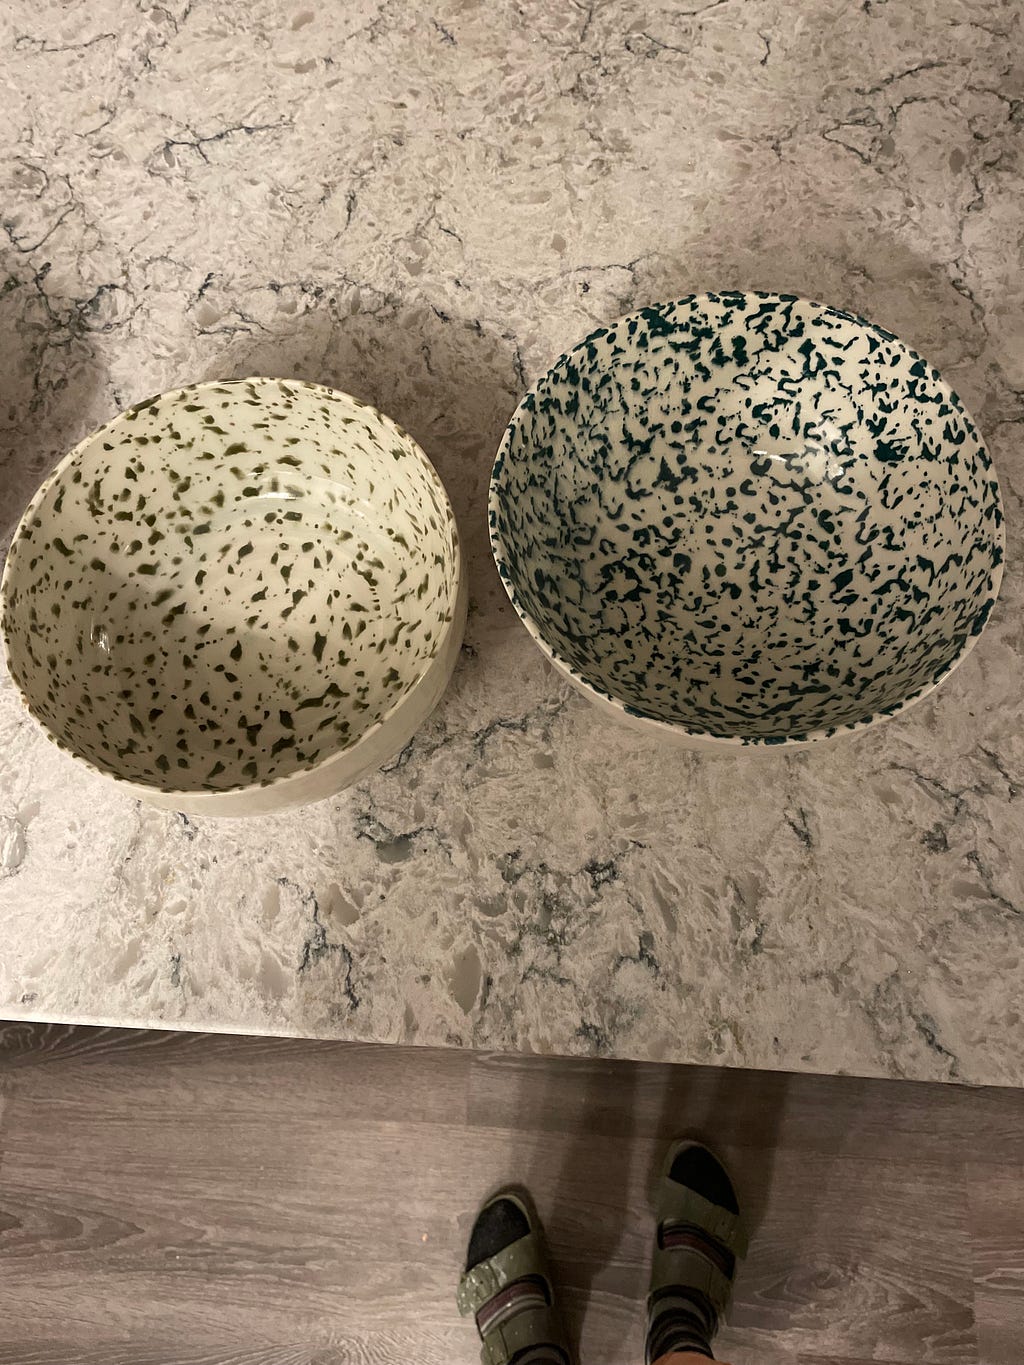 Finished ceramic bowls